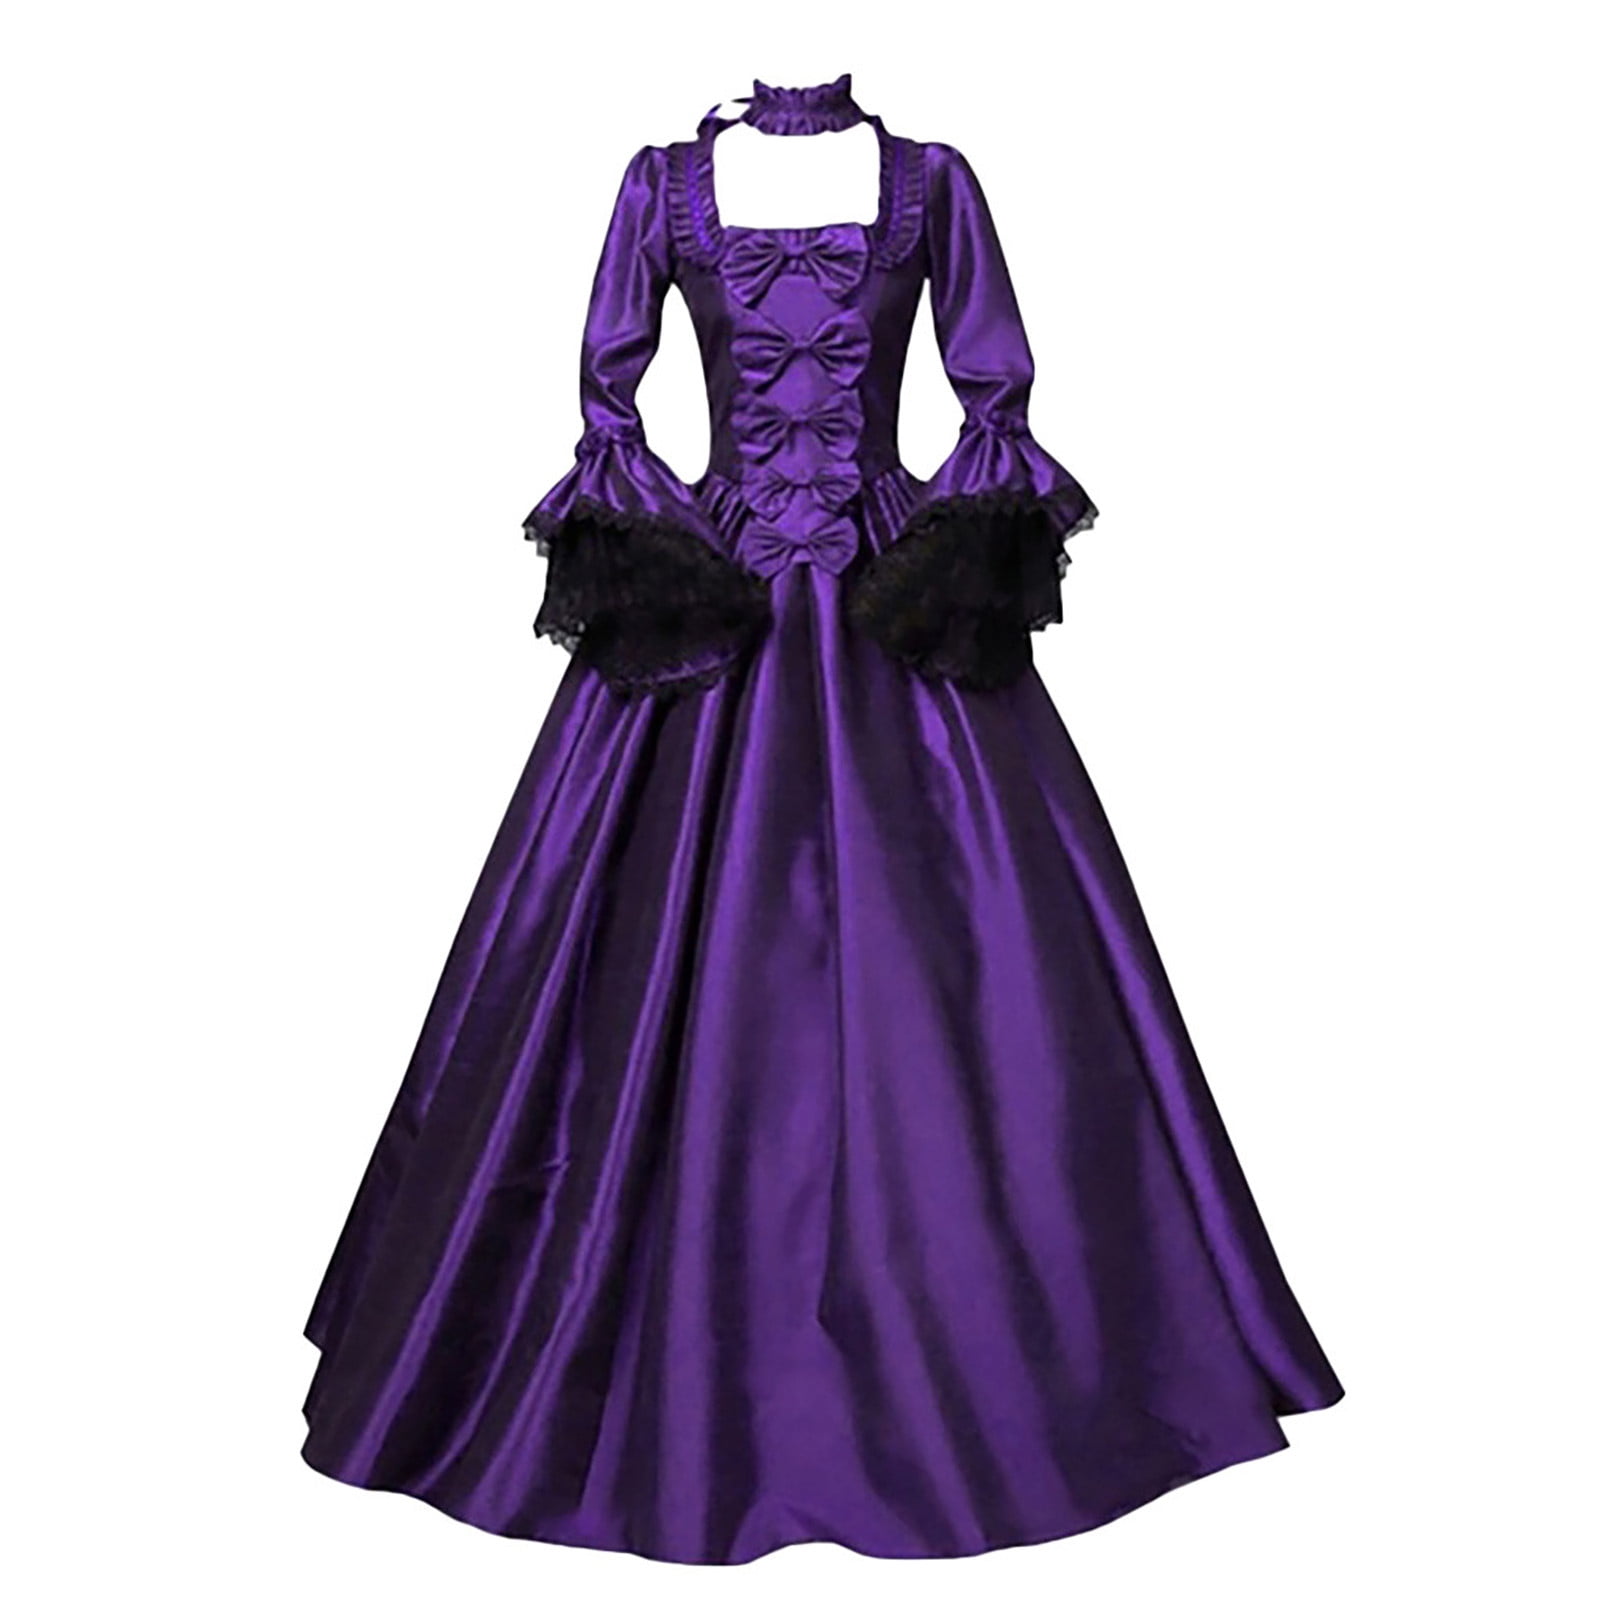 Plus Size Women Renaissance Victorian Dress Half Sleeve Lace Ball Gown Dress 